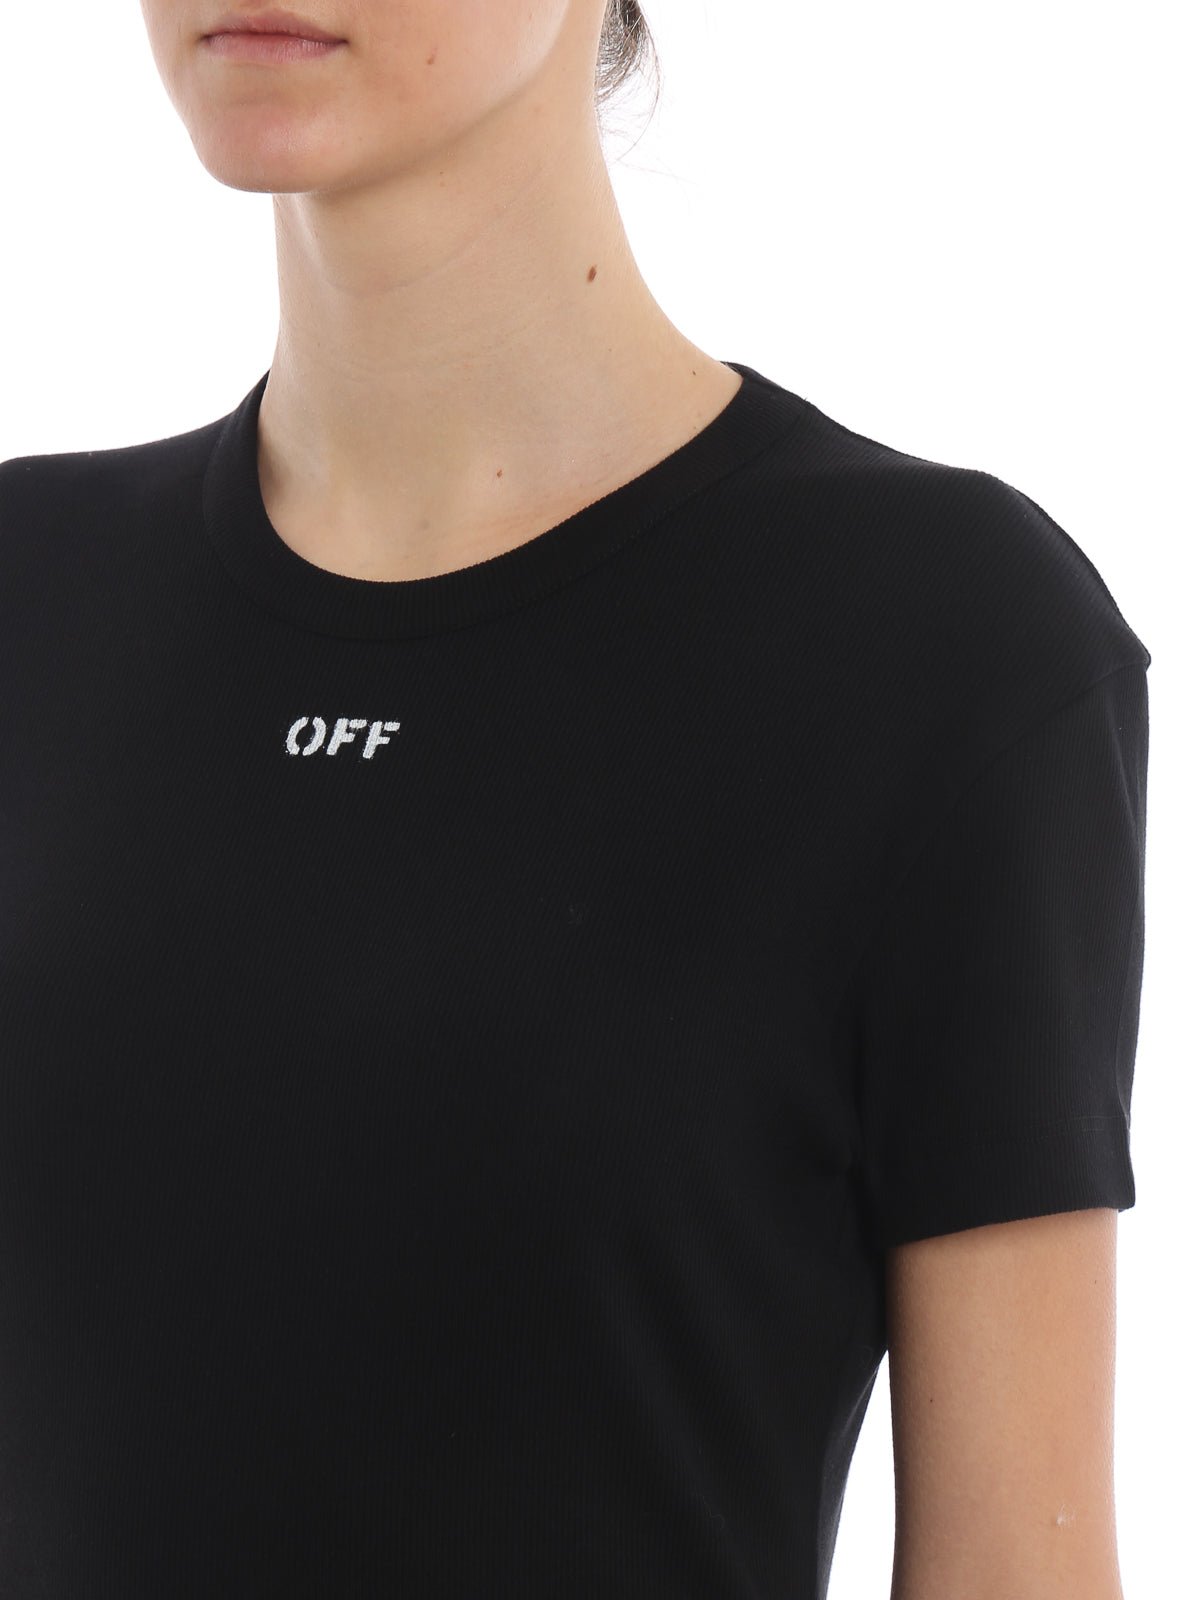 Off-White Black Modal Tops & T-Shirt - Fizigo